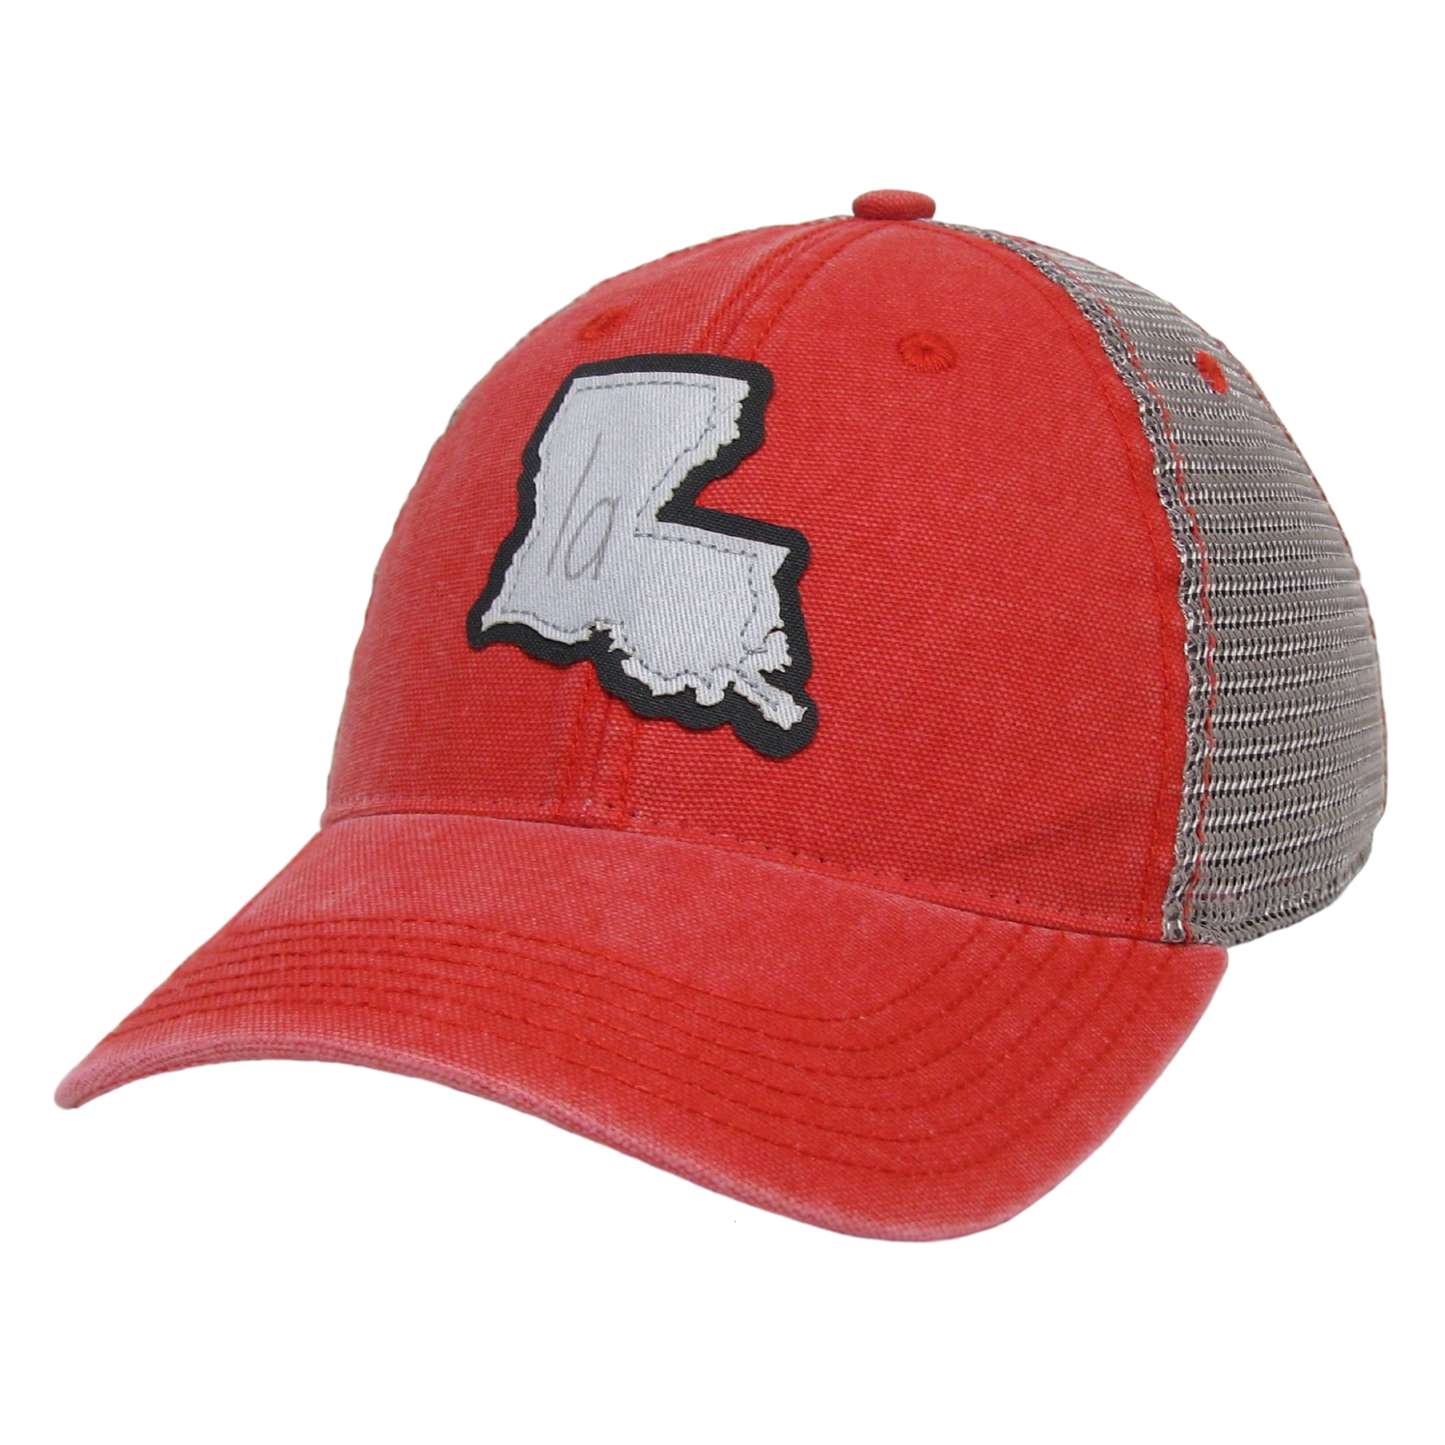 Louisiana Dashboard Trucker Hat in Red/Grey